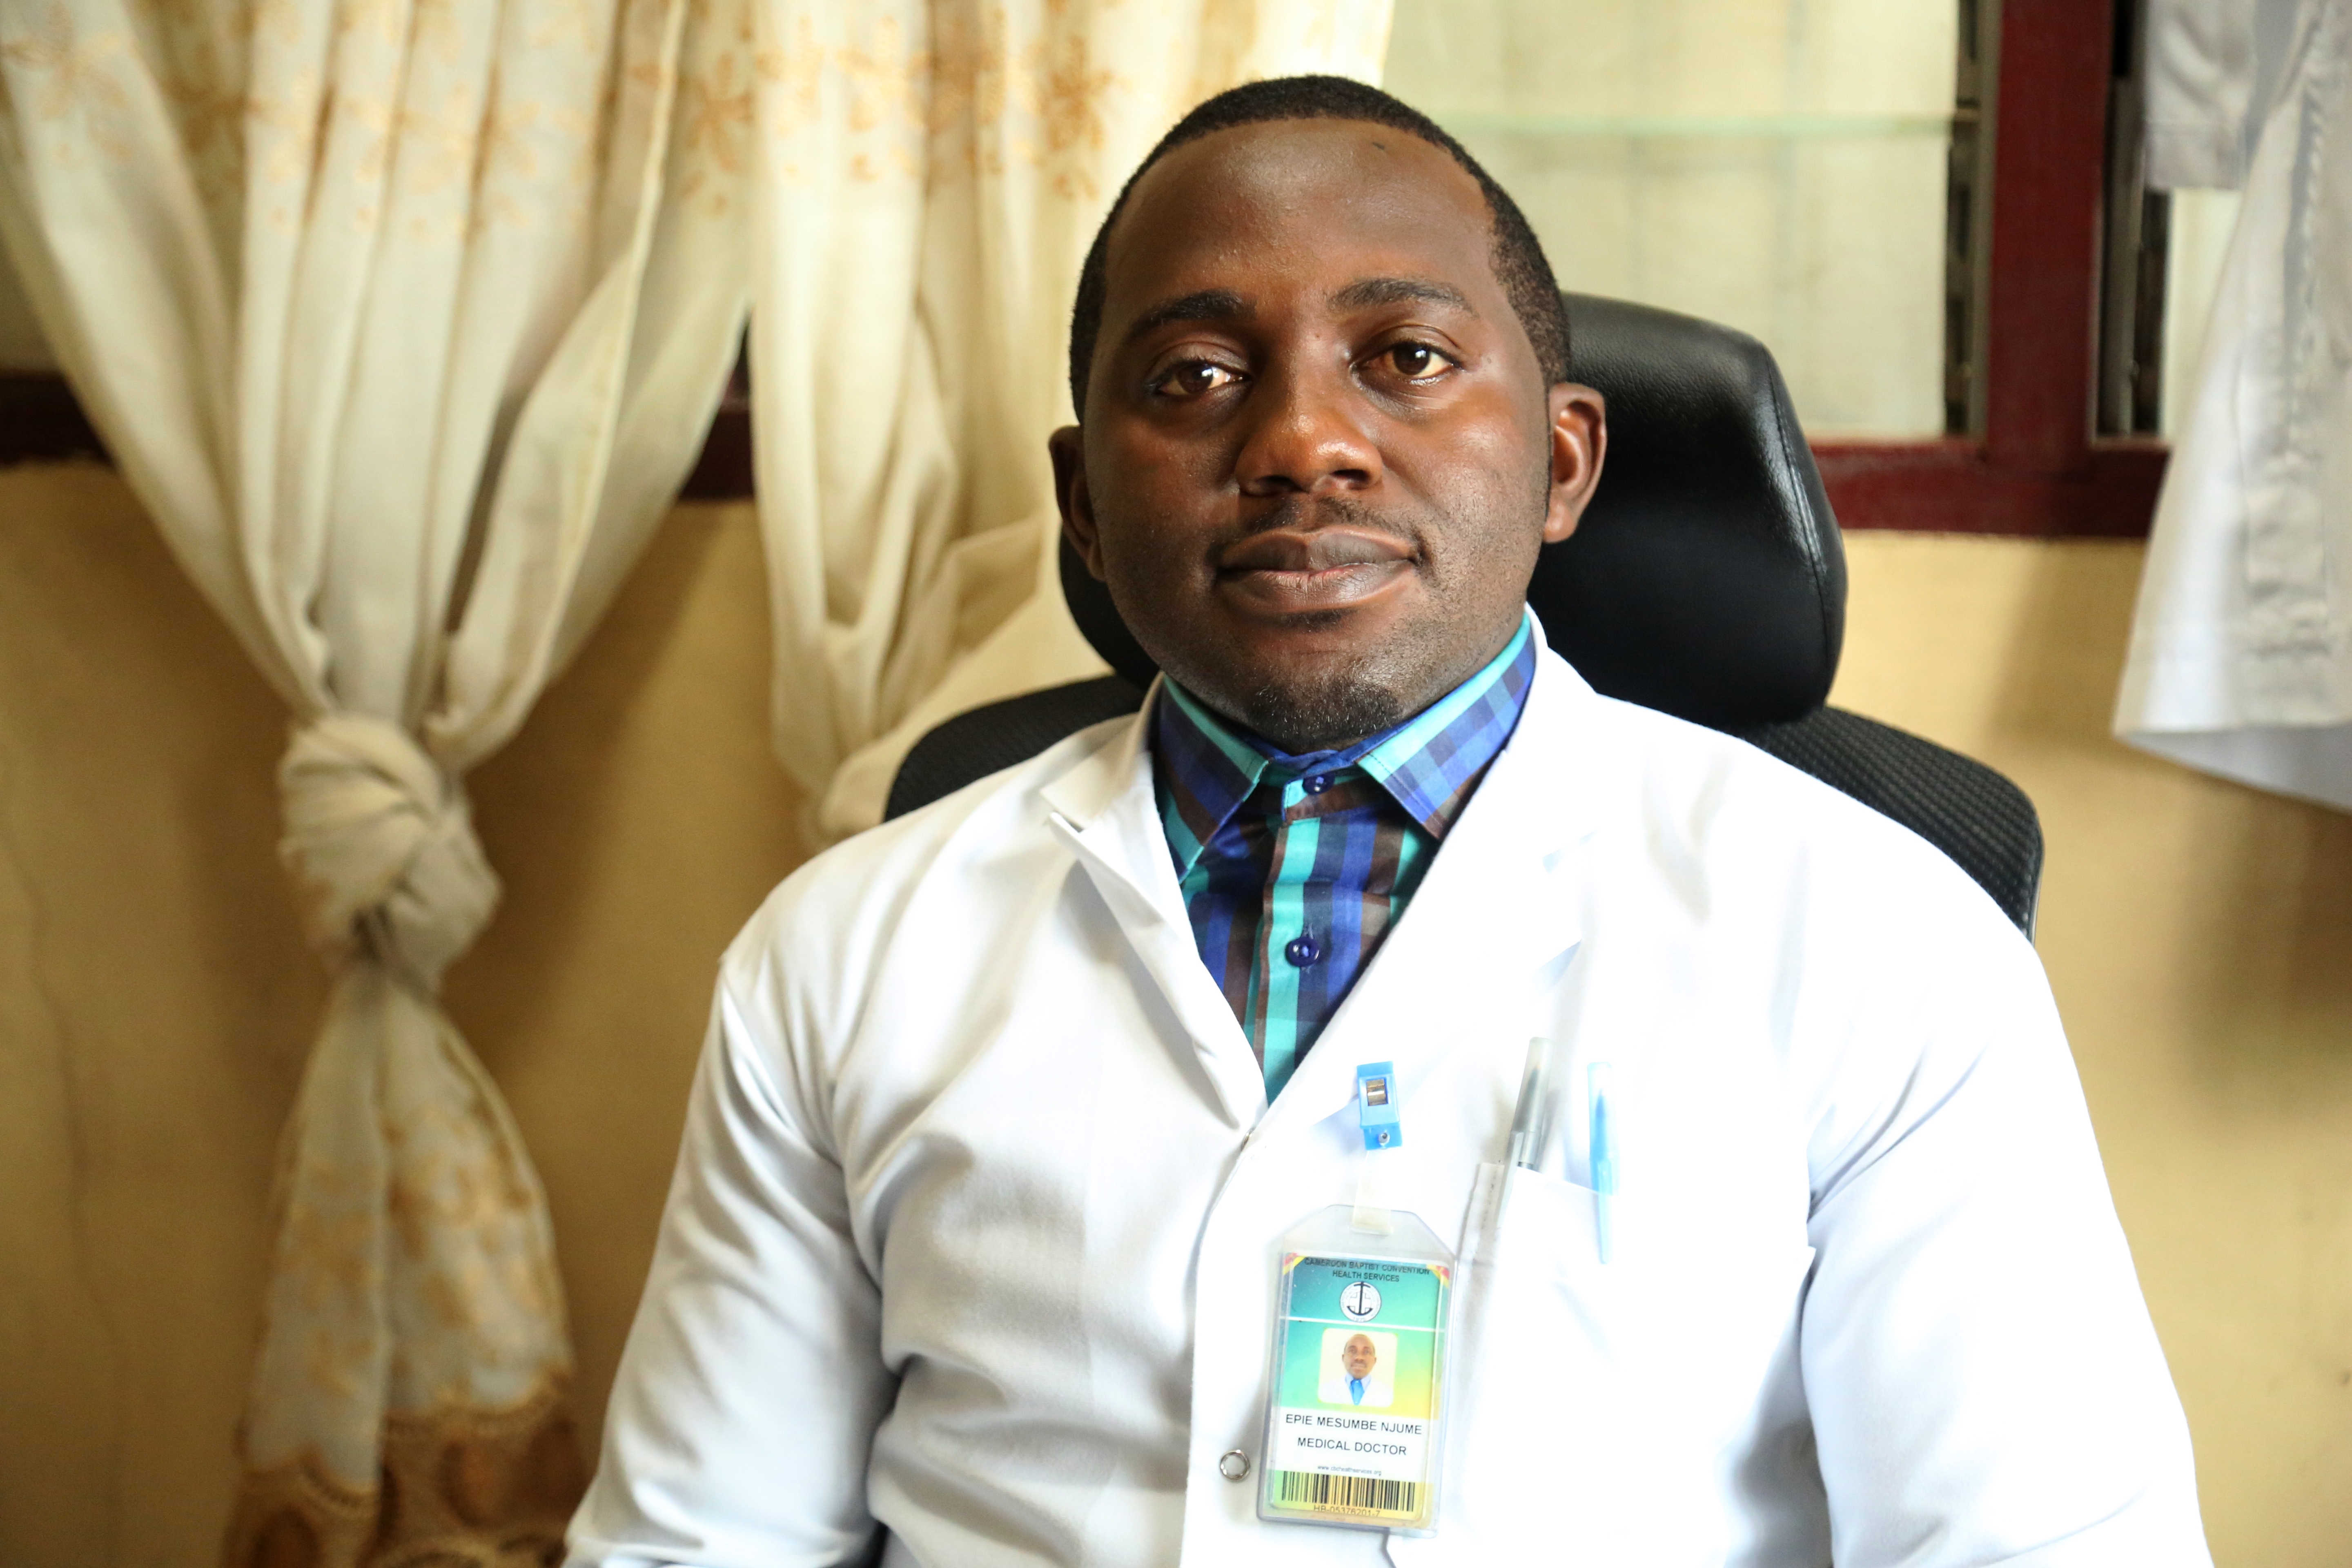 Dr. Njume Epie